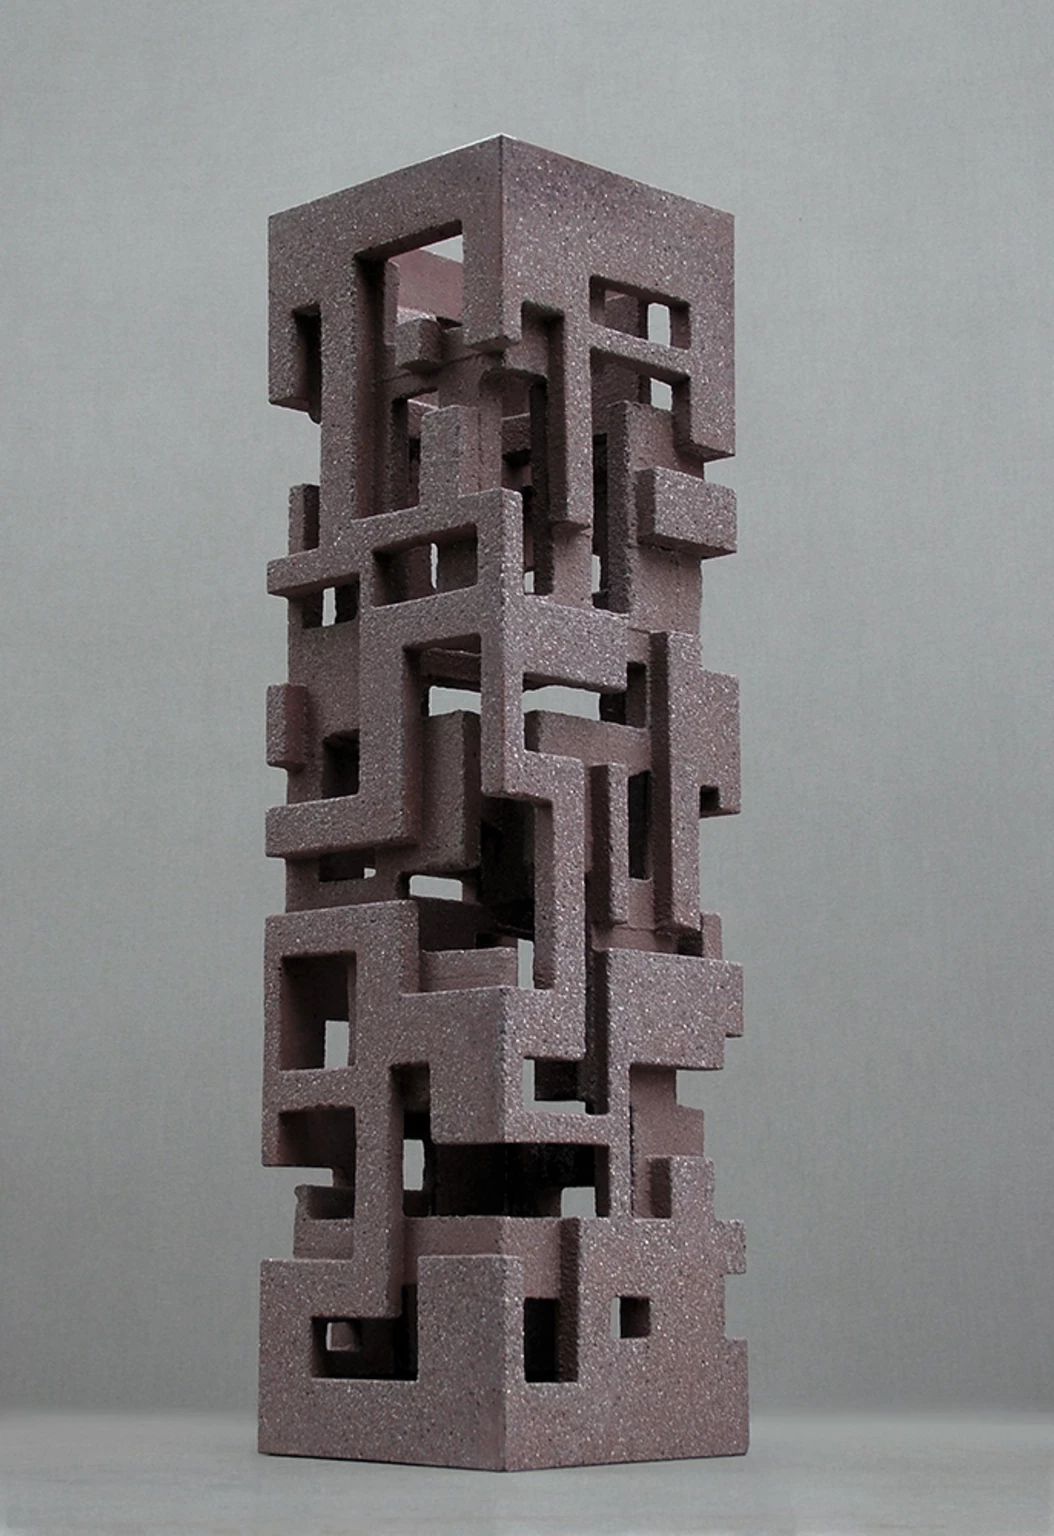 Maze, 2011 - concrete, 84 x 23 x 23 cm